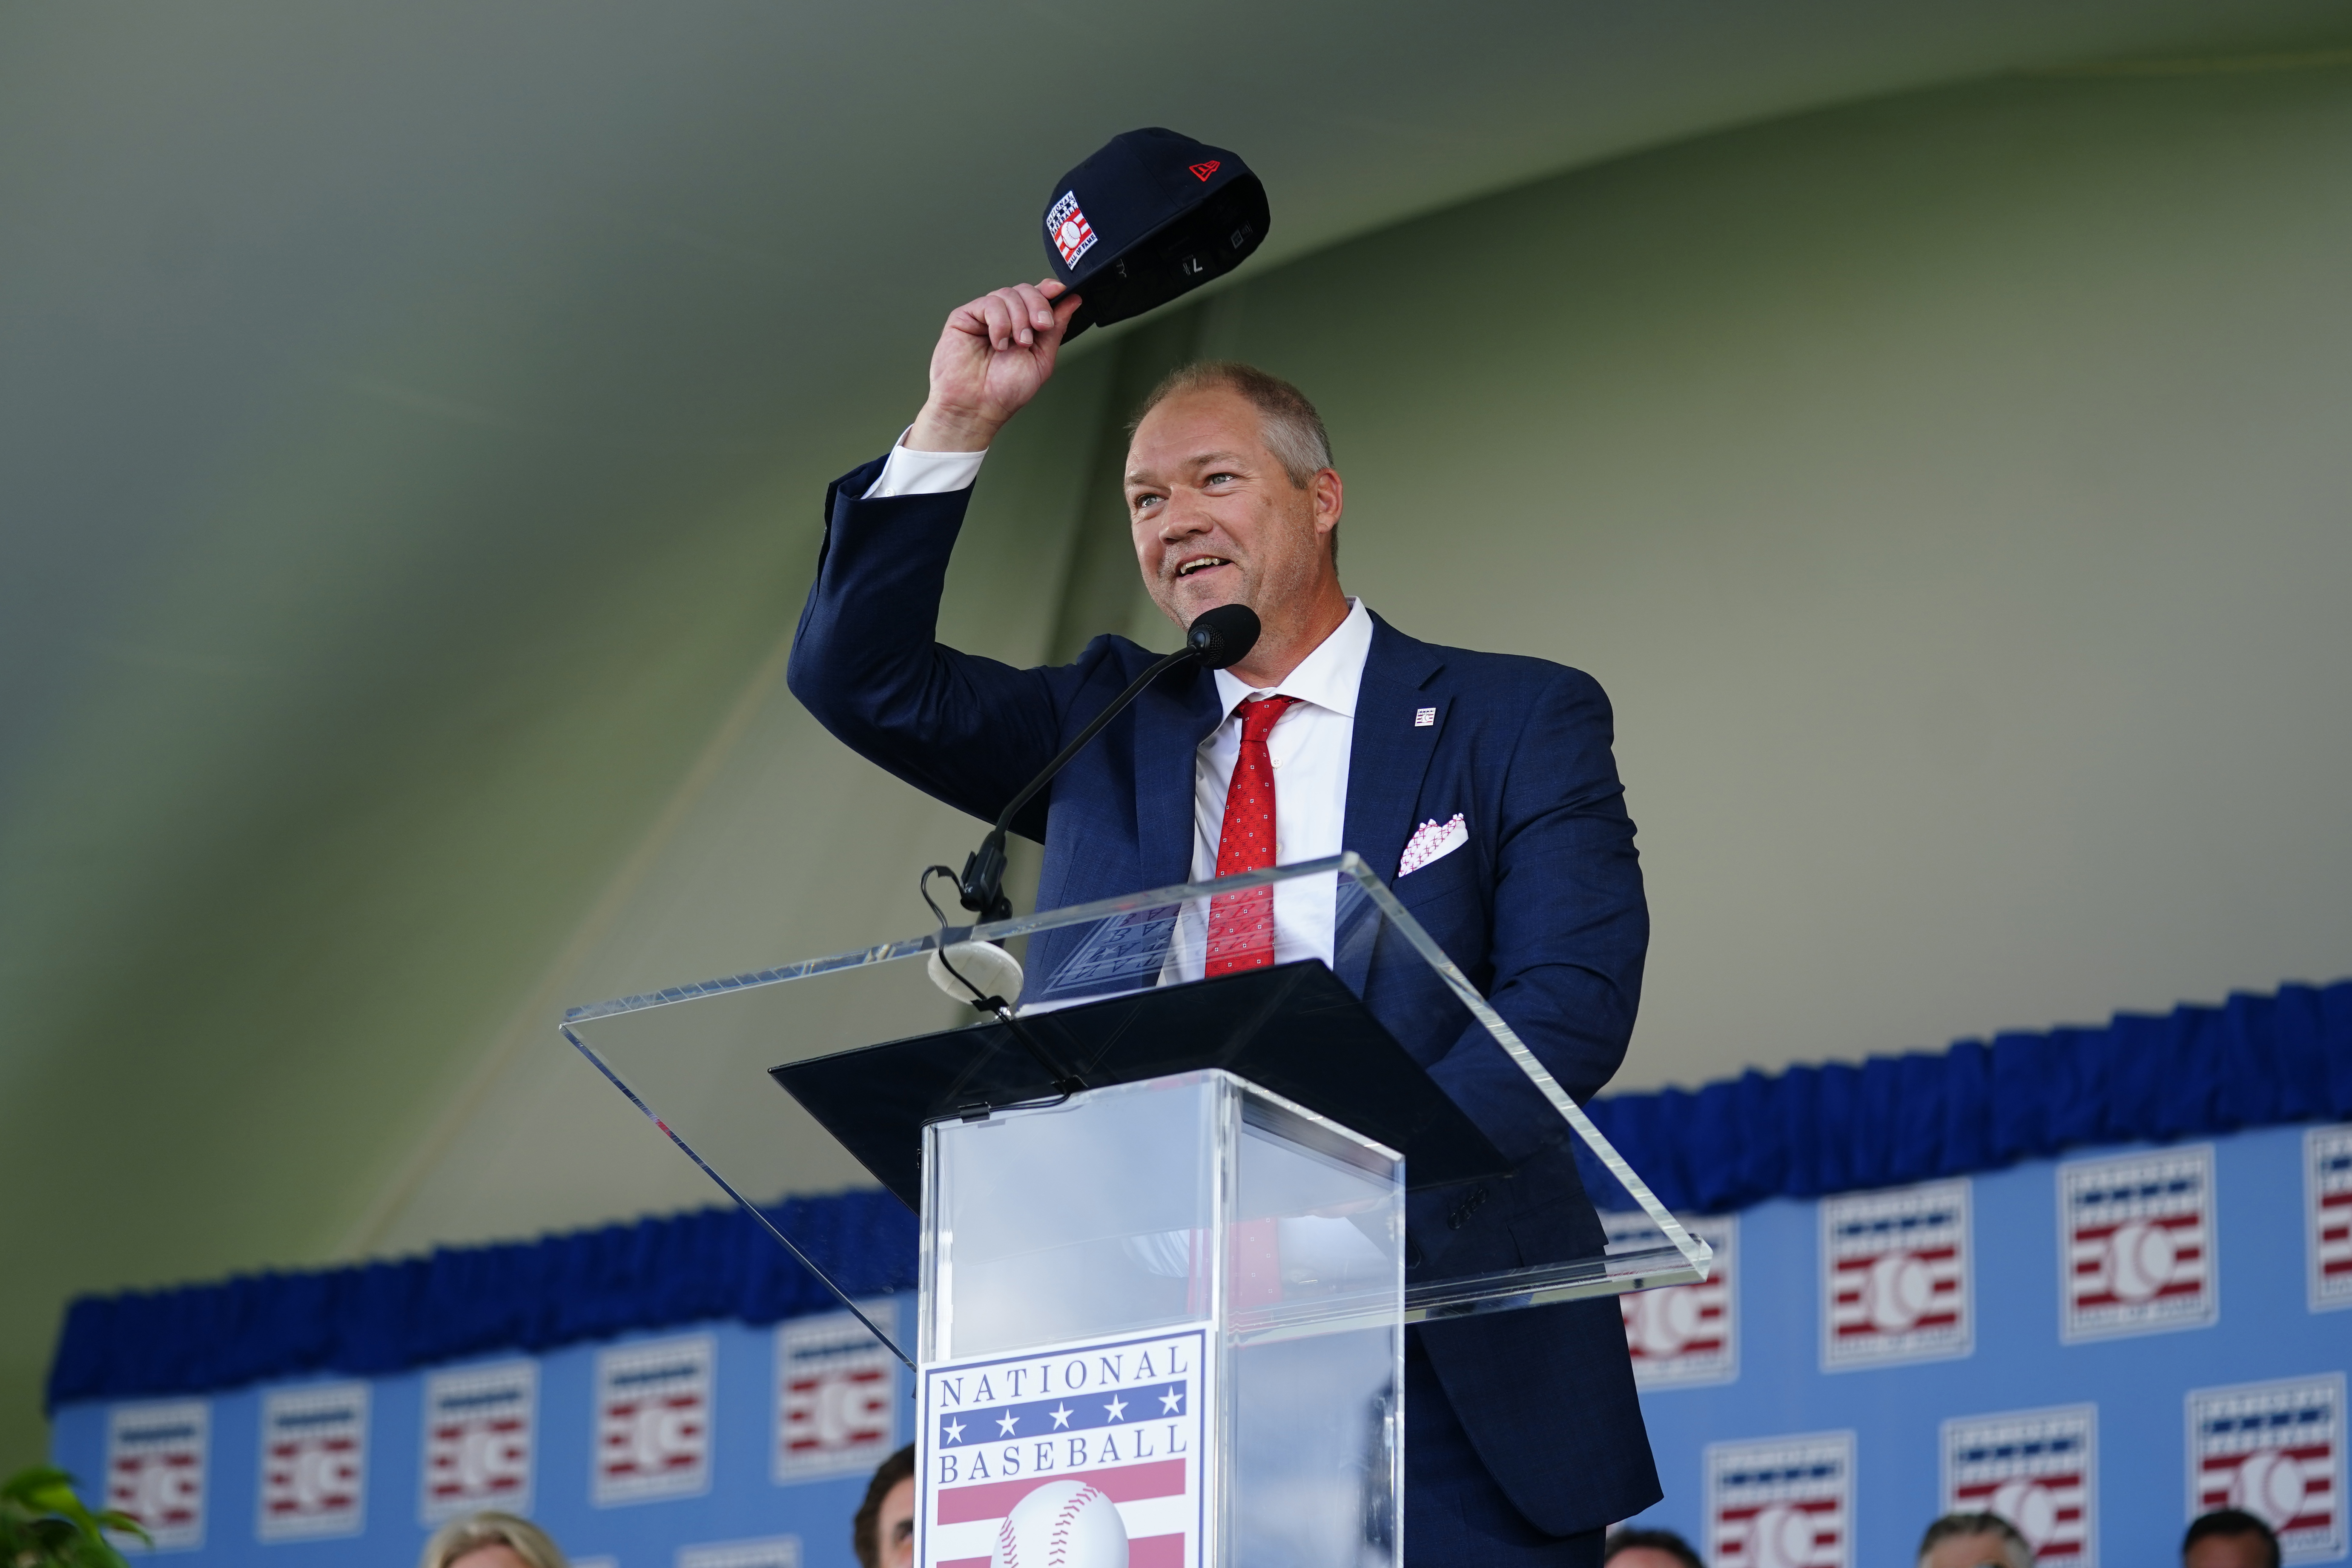 A look into Scott Rolen's emotional speech from Baseball Hall of